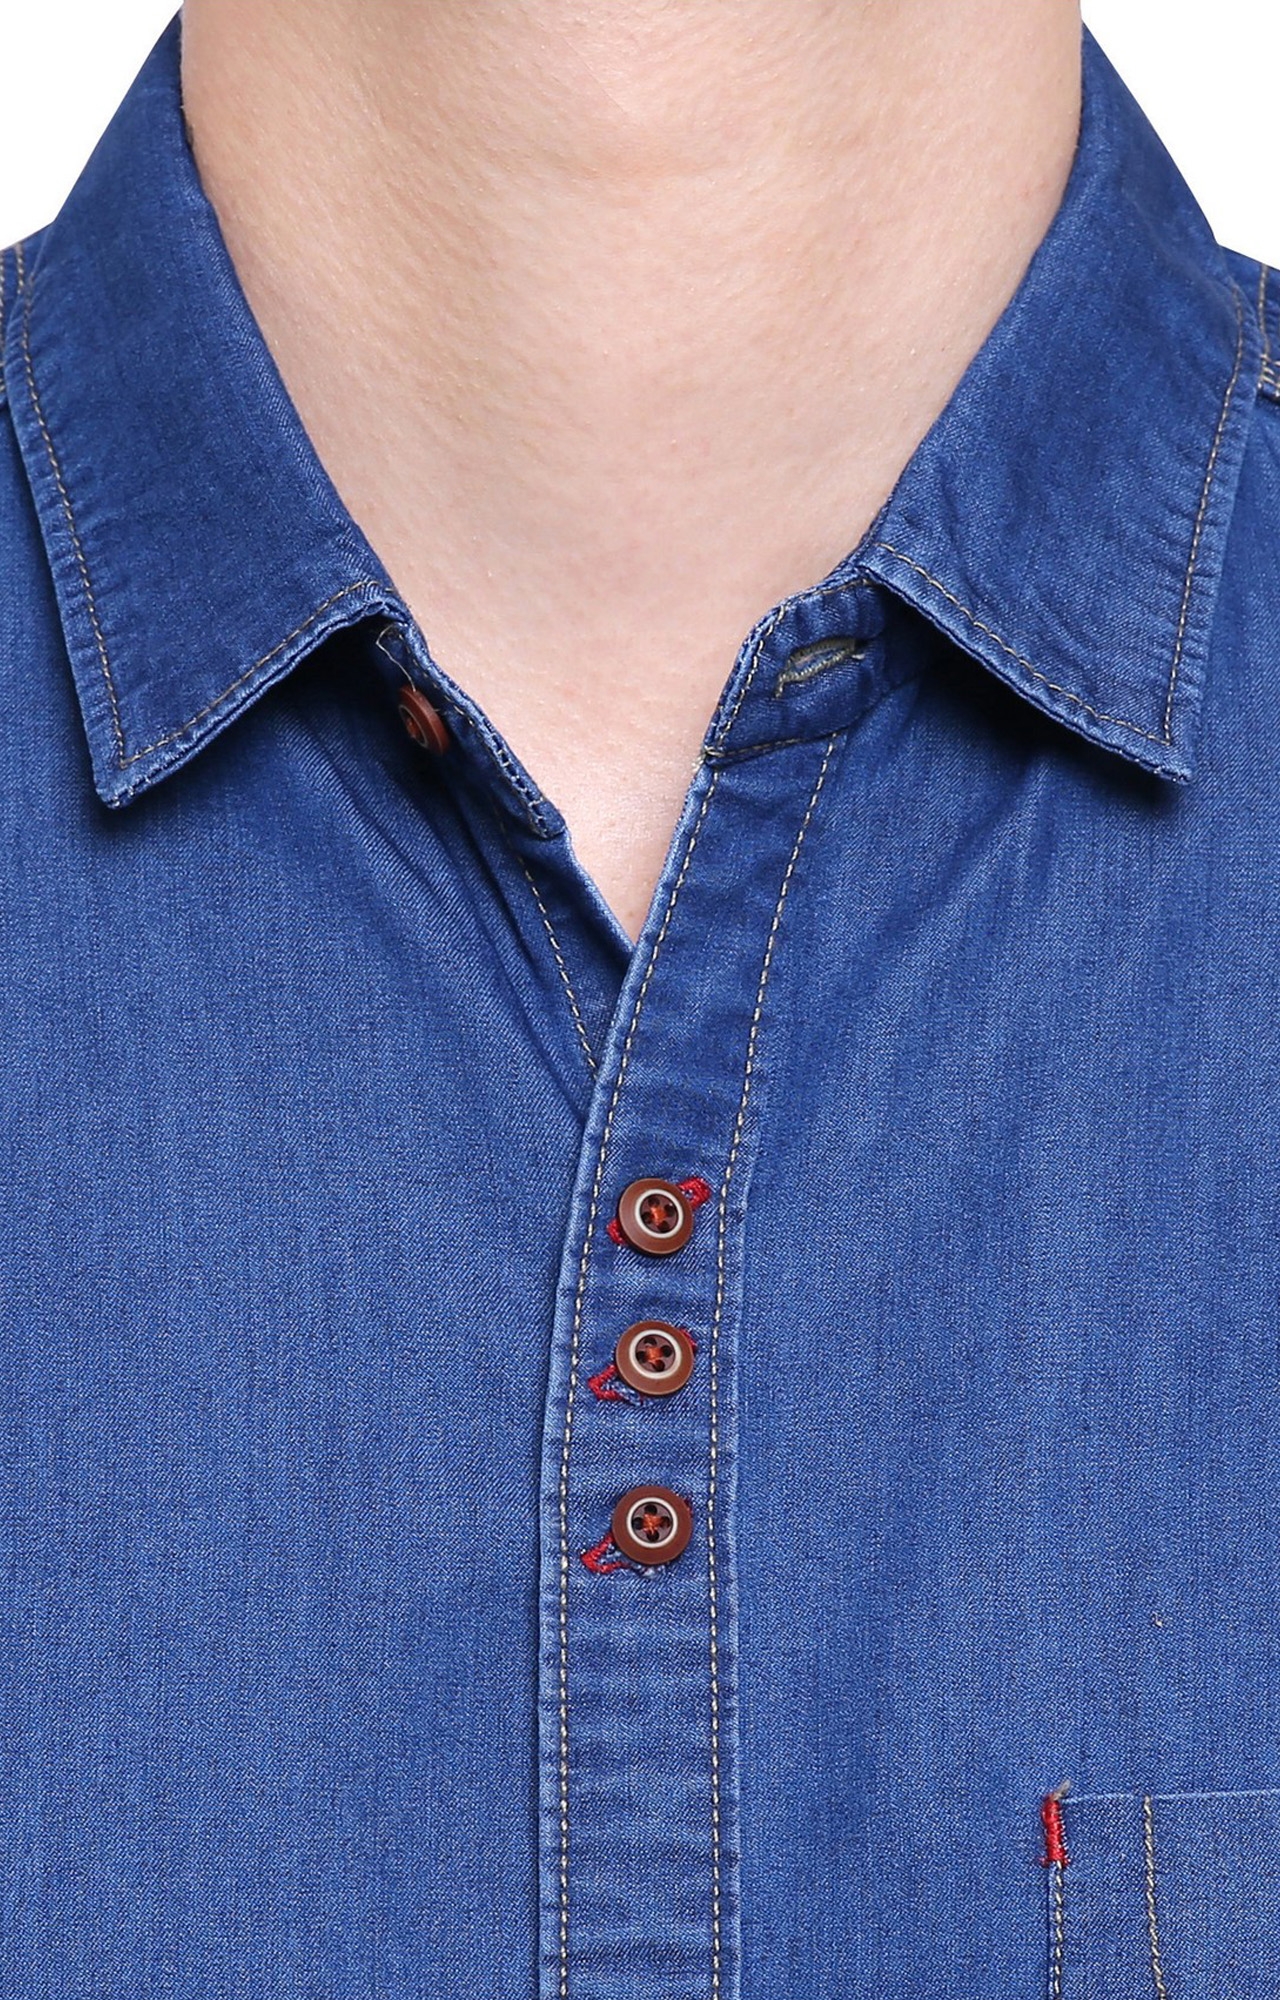 Kuons Avenue | Kuons Avenue Men's True Blue Half Sleeve Denim Shirt 5